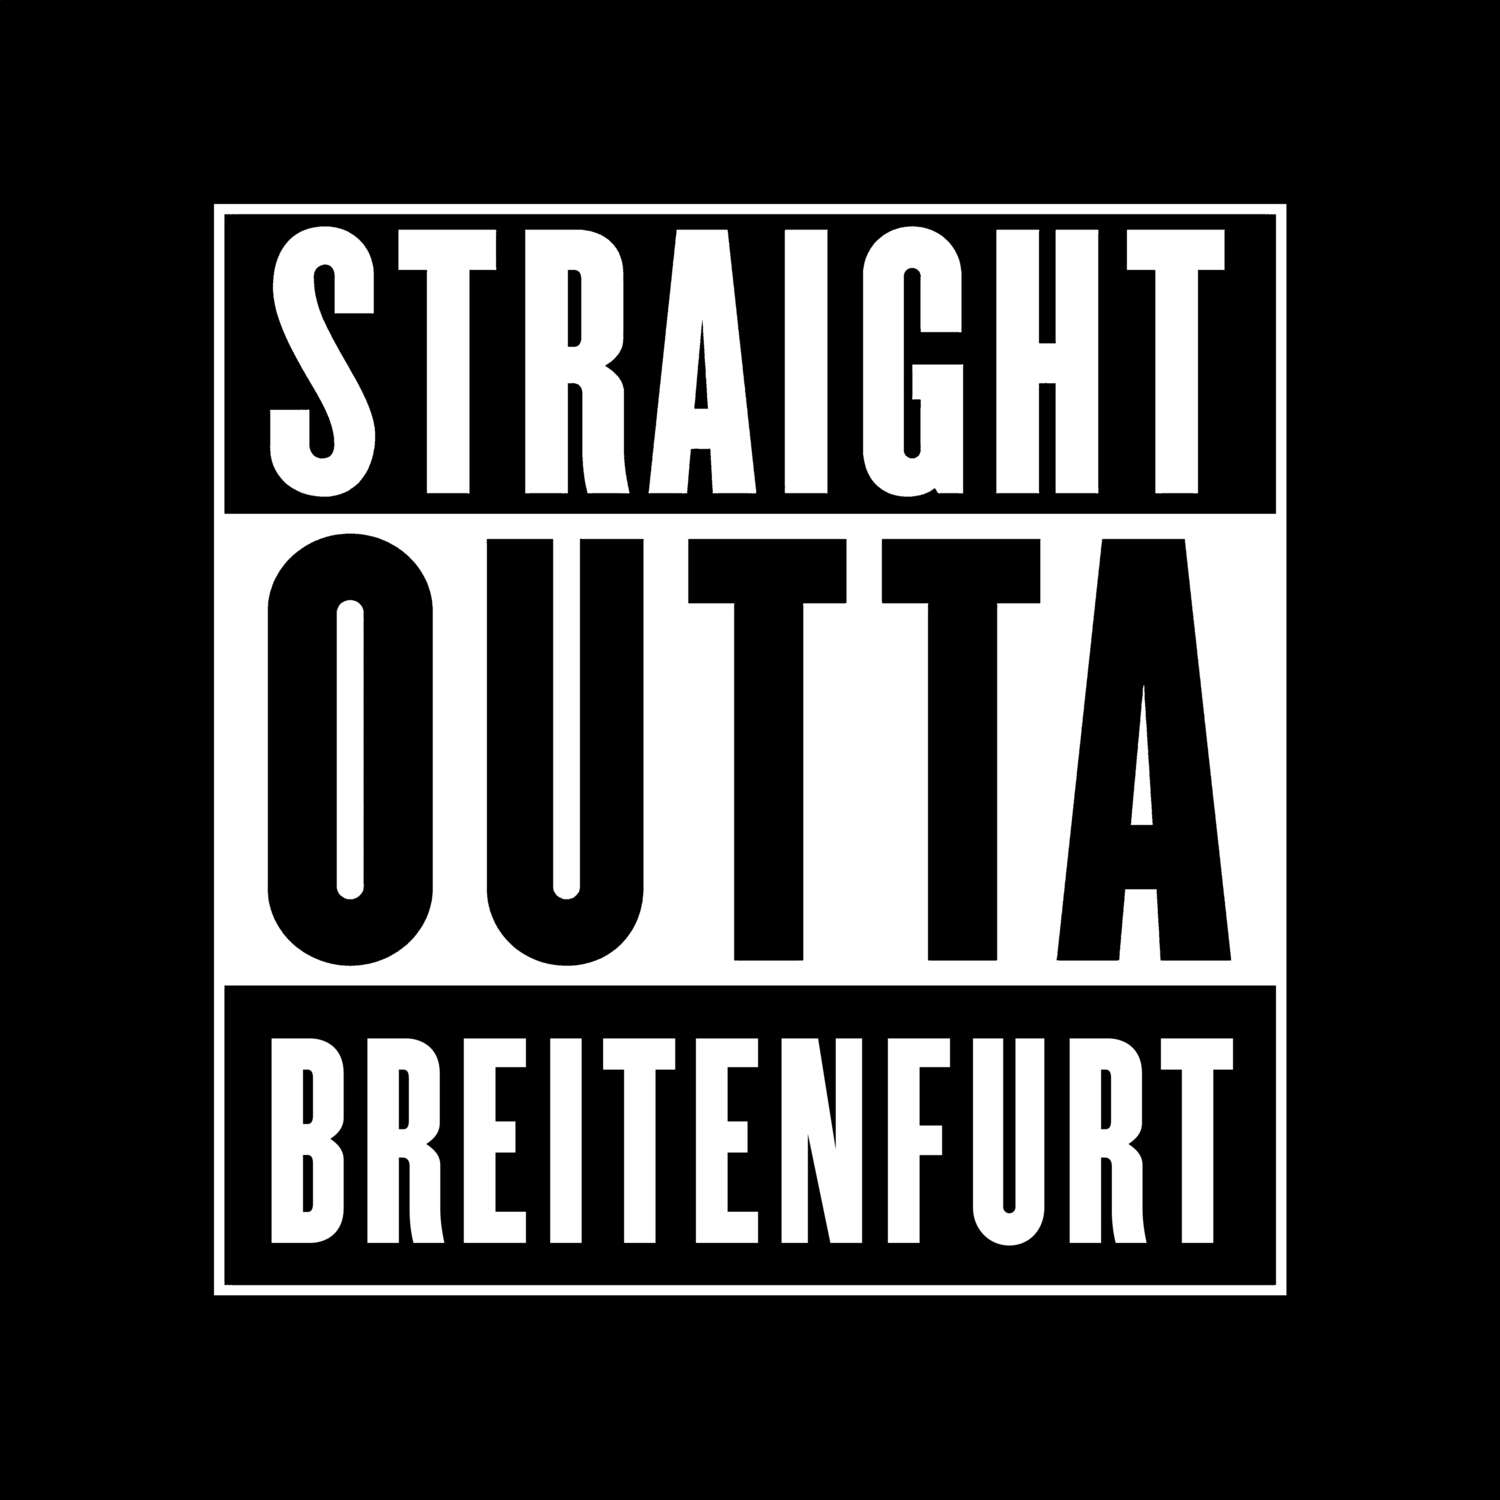 Breitenfurt T-Shirt »Straight Outta«